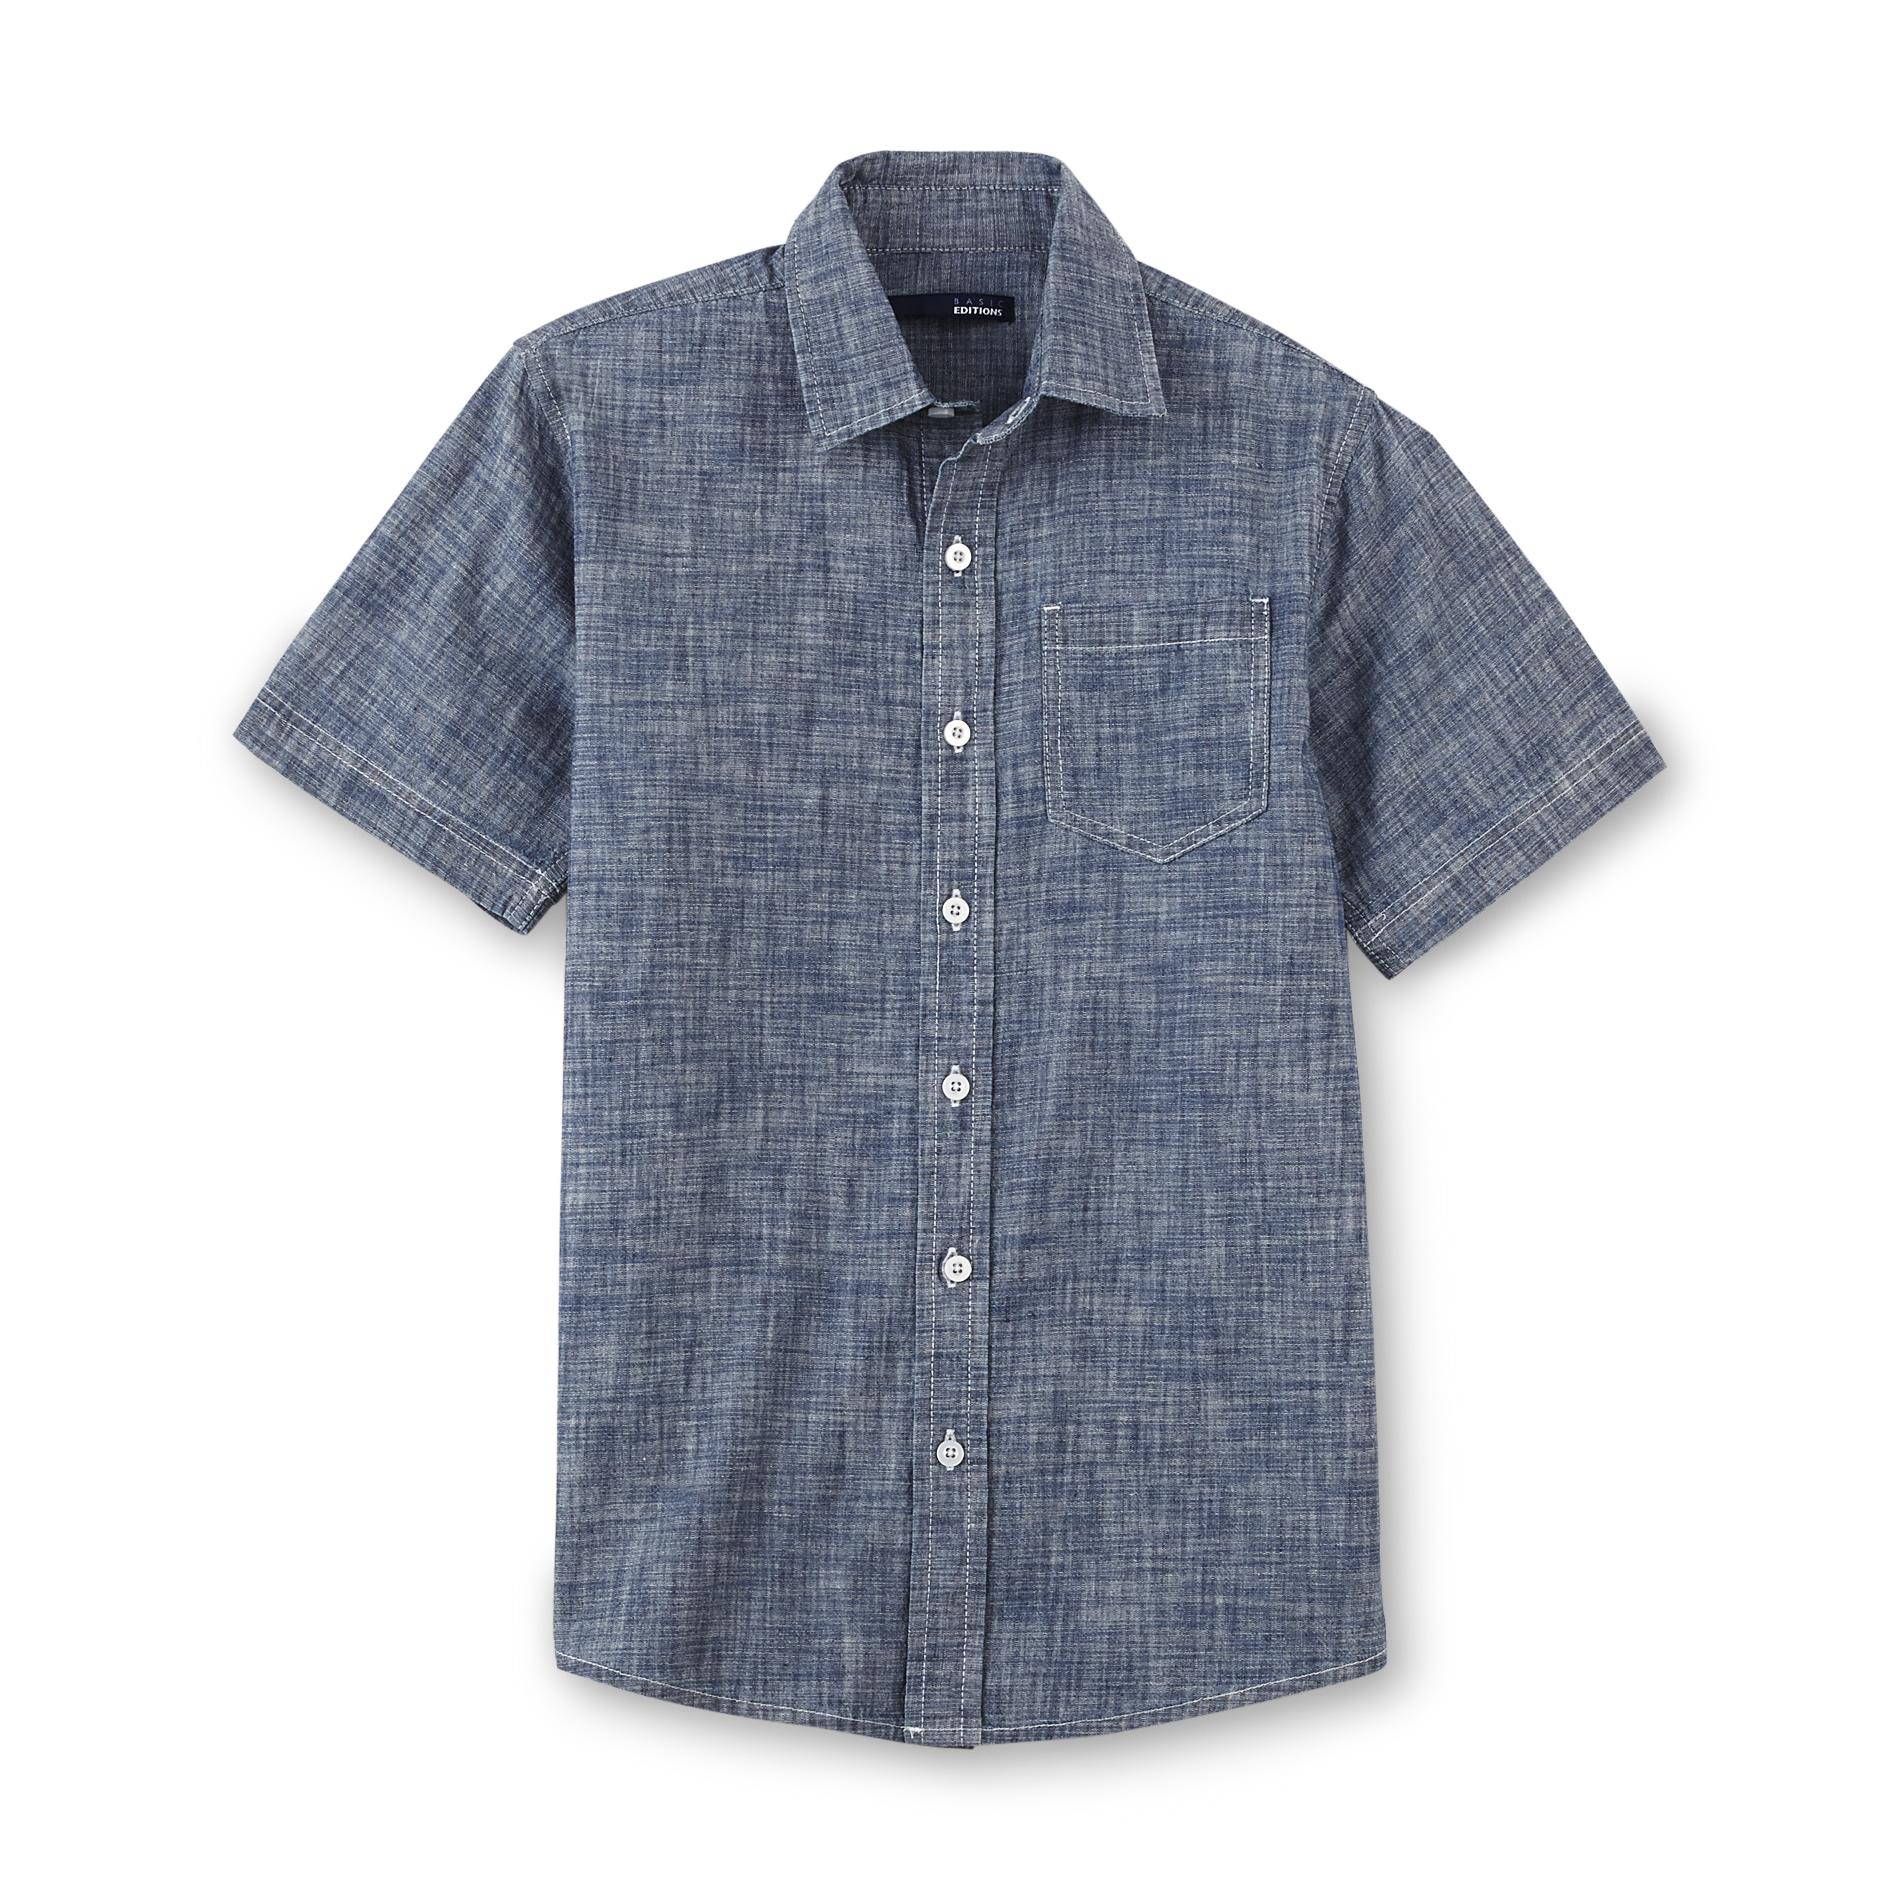 Basic Editions Boy's Short-Sleeve Chambray Shirt